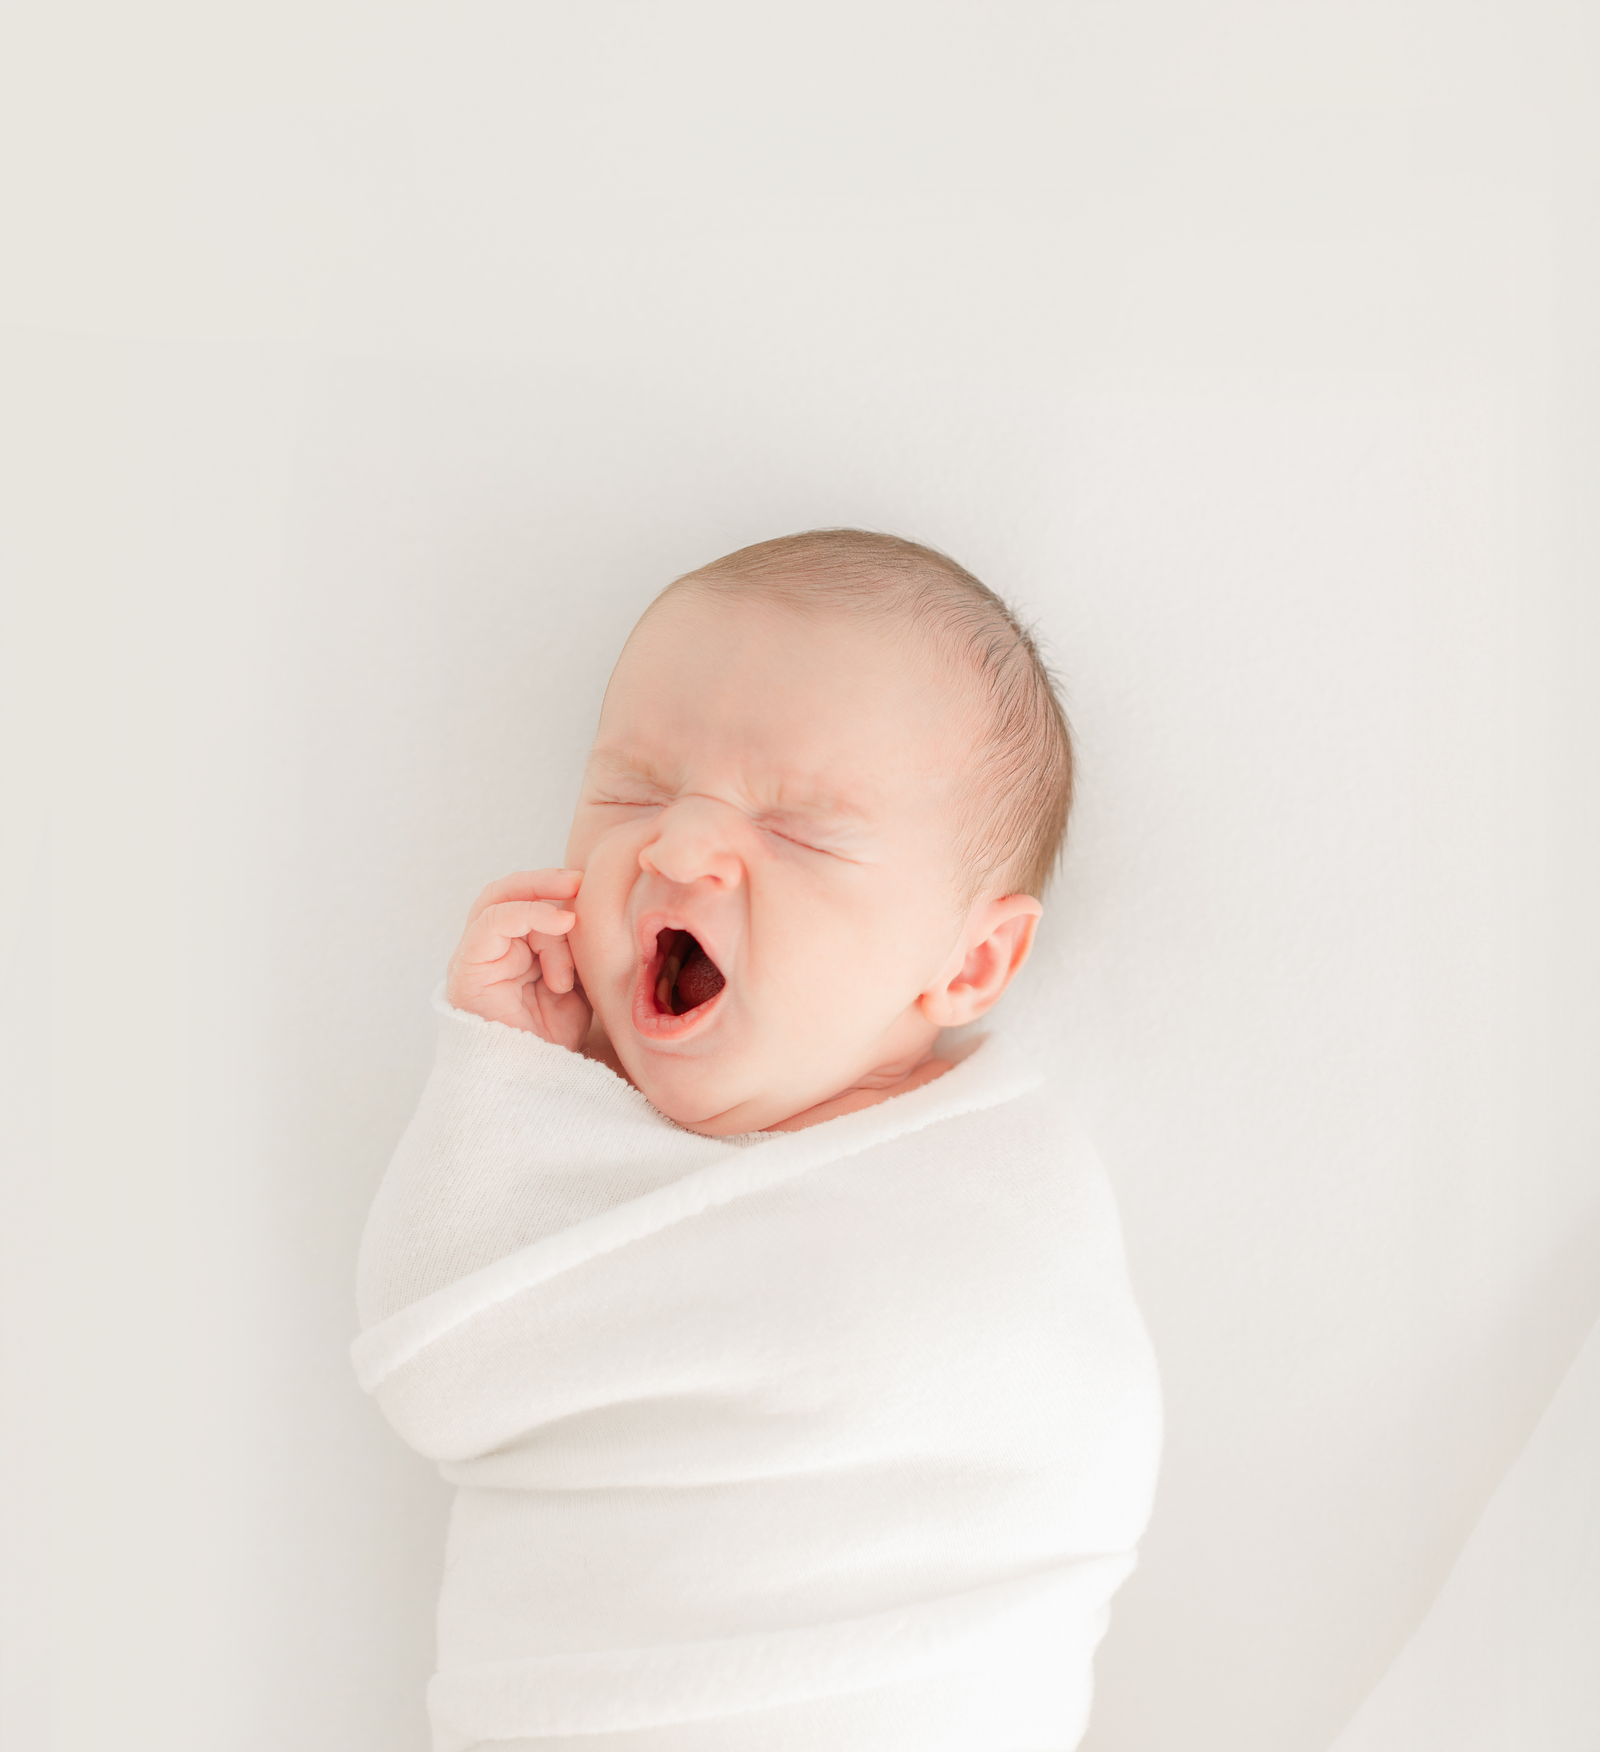 baby yawns during massachusetts newborn photography session